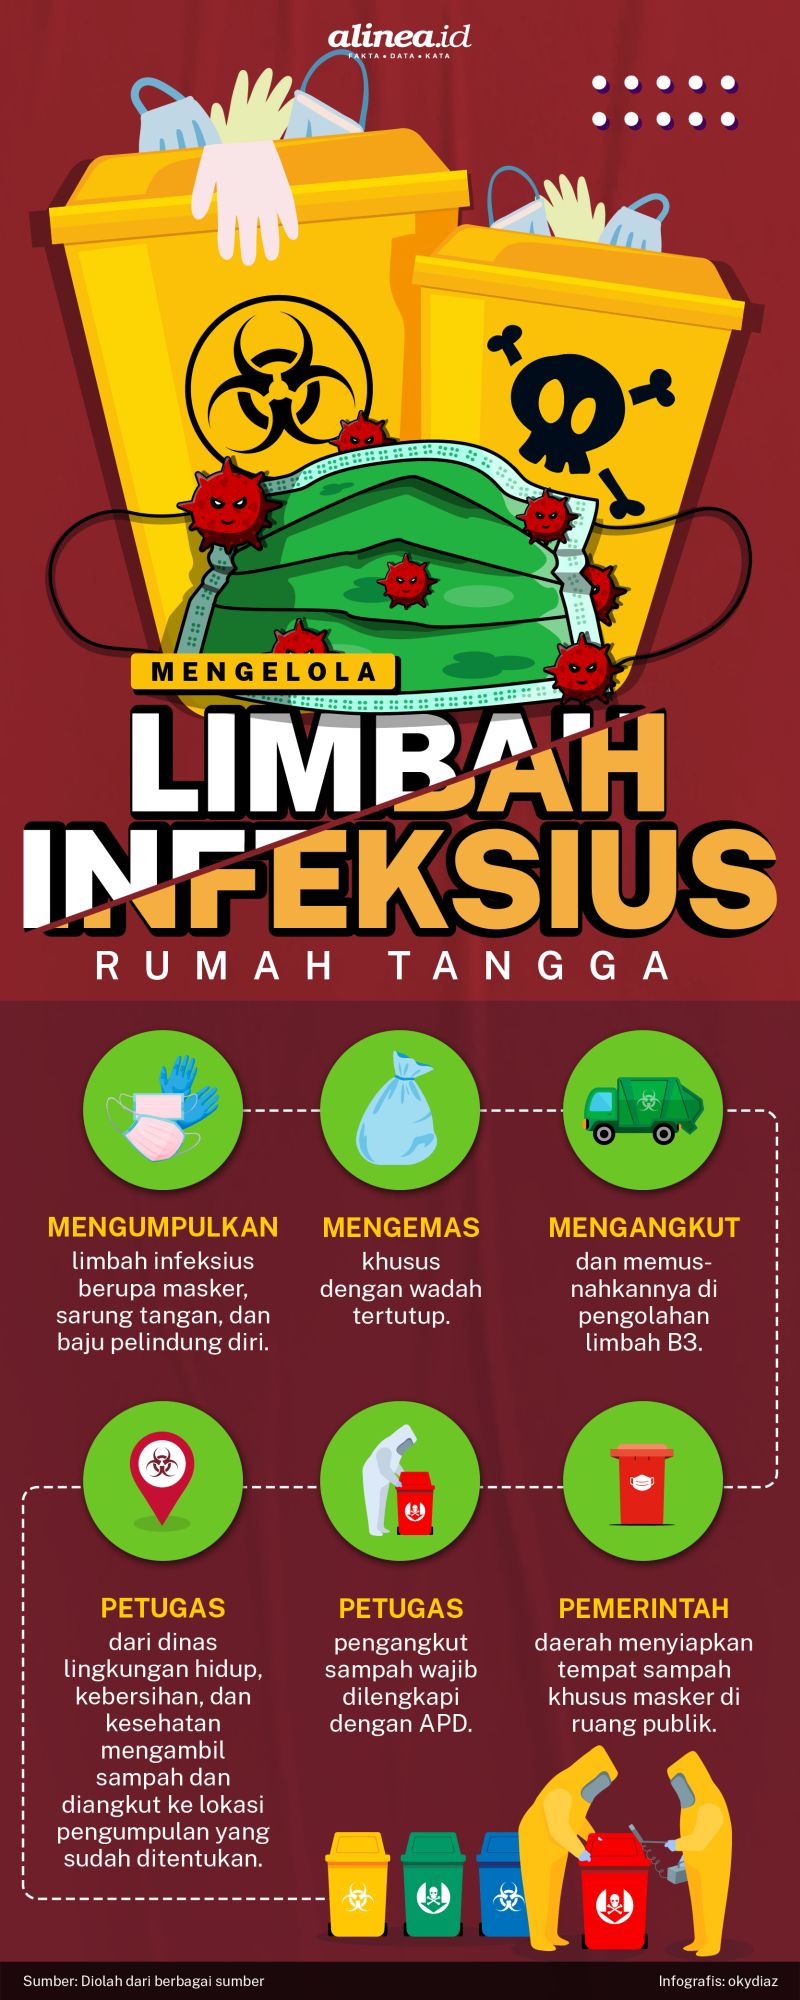 Infografik sampah infeksius. Alinea.id/Oky Diaz.